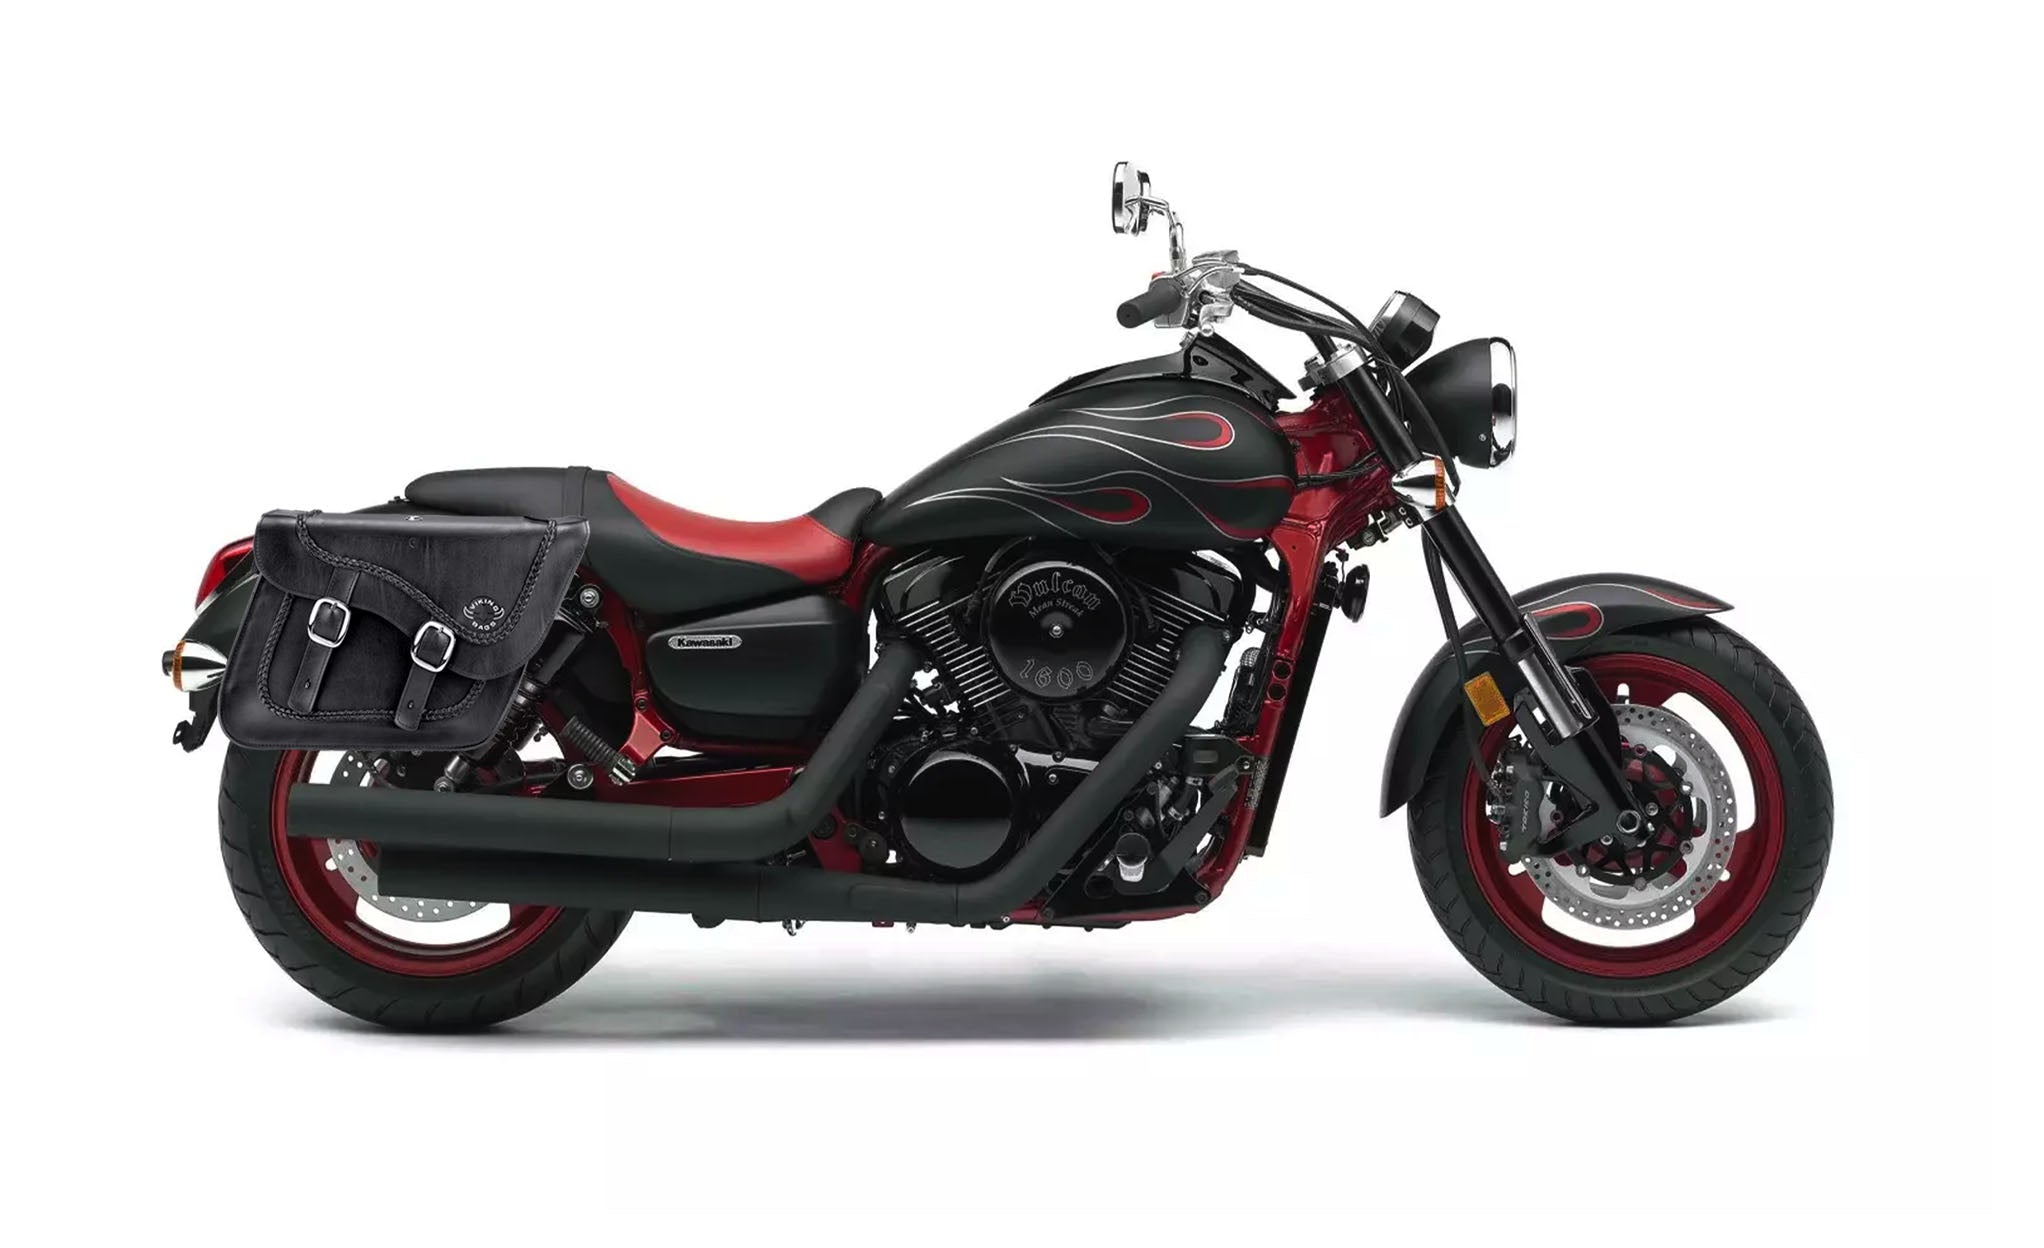 Viking Americano Kawasaki Mean Streak 1600 Braided Large Leather Motorcycle Saddlebags on Bike Photo @expand